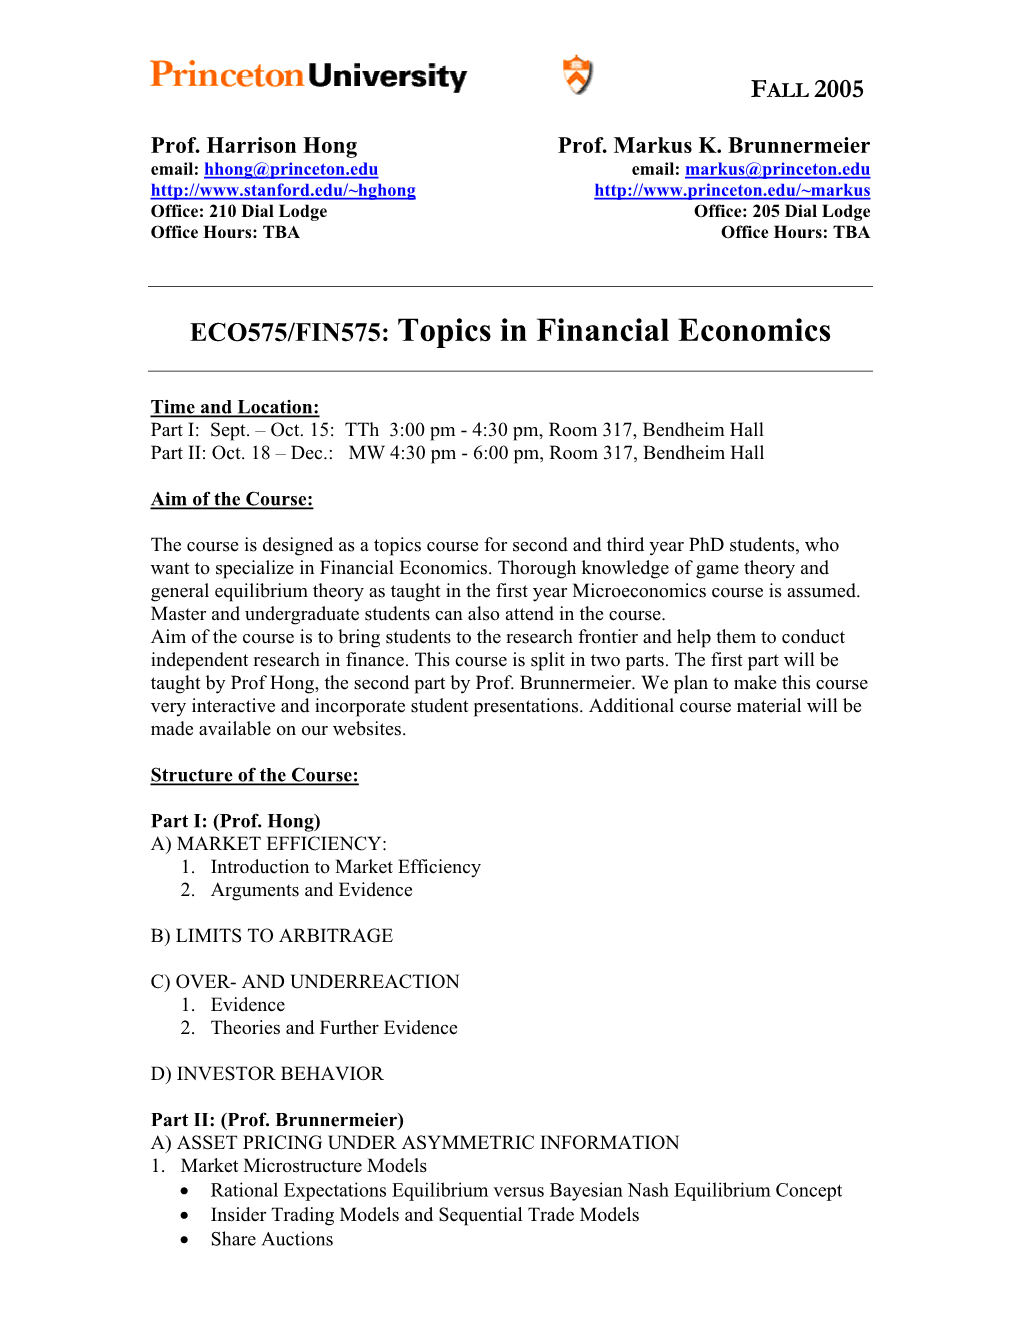 ECO575/FIN575: Topics in Financial Economics